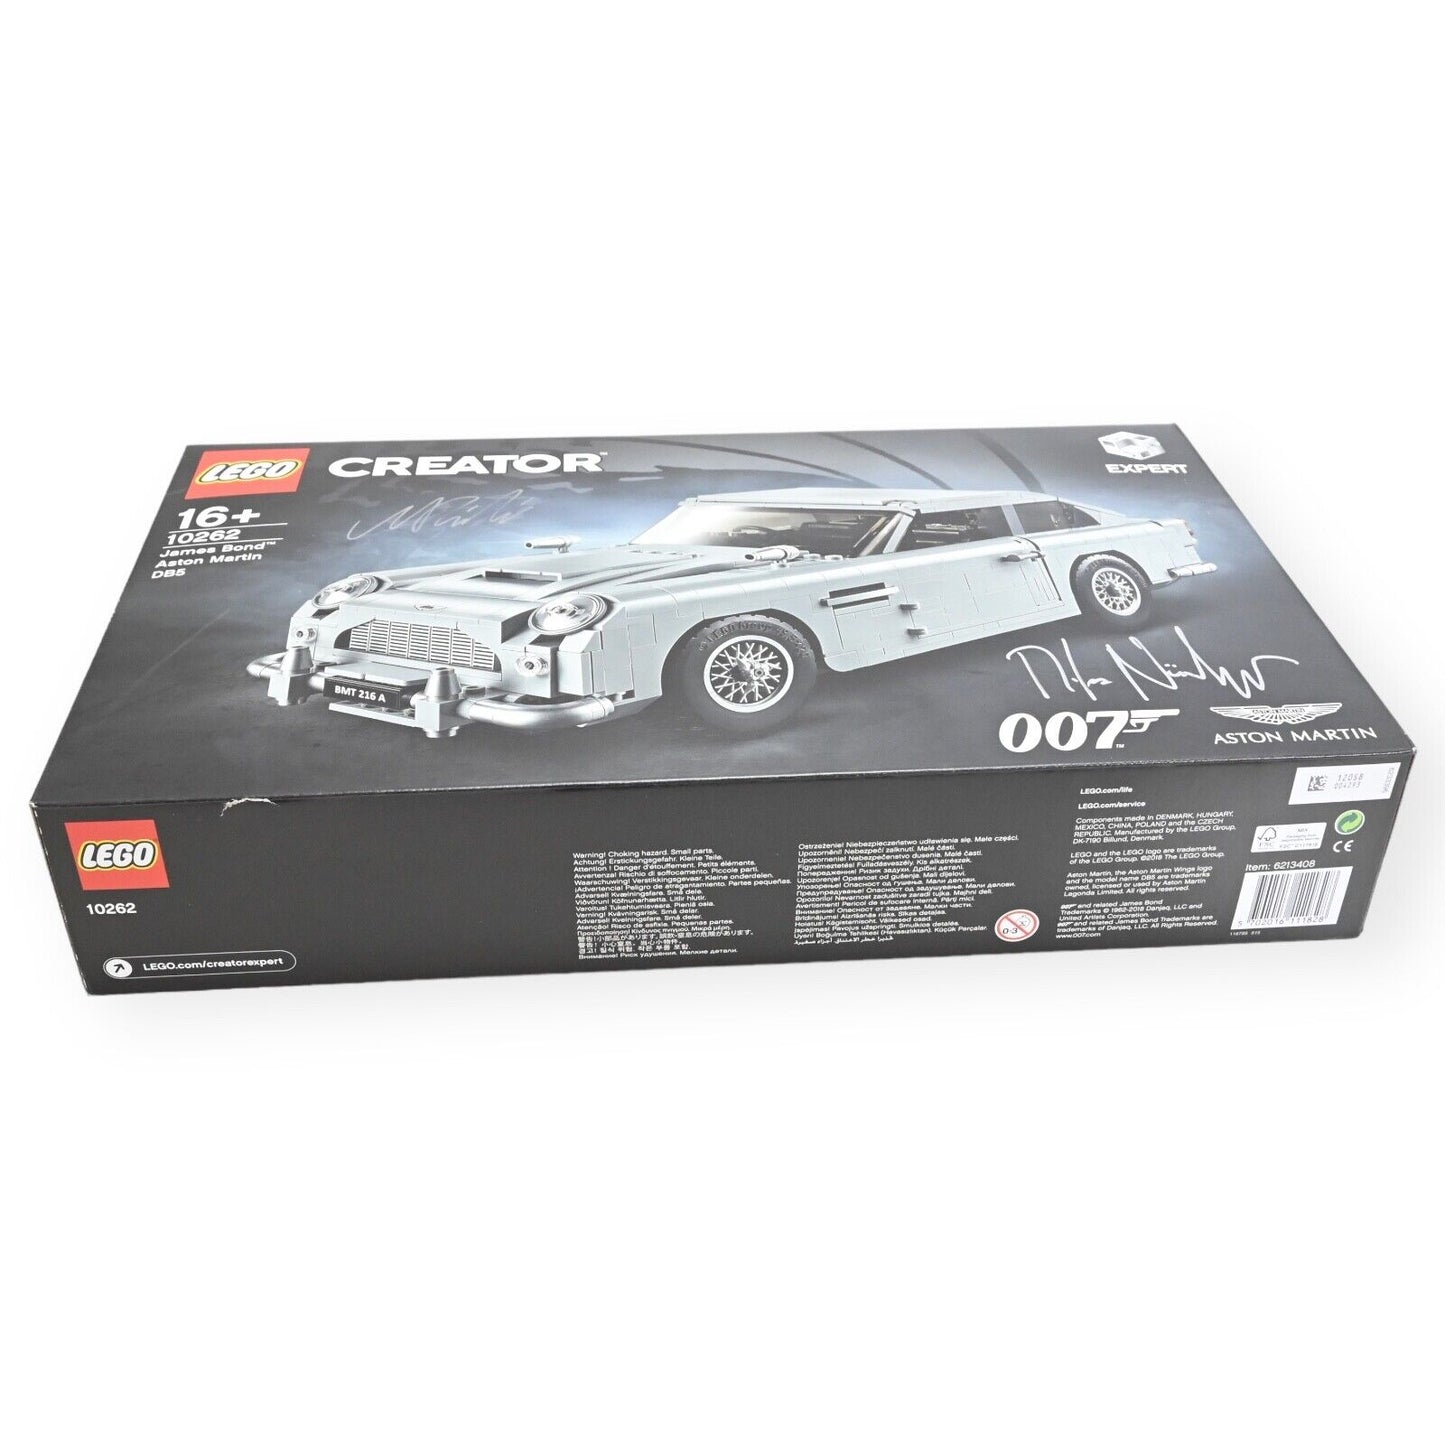 Lego Creator 10262 James Bond Aston Martin DB5 - Signed by Designers